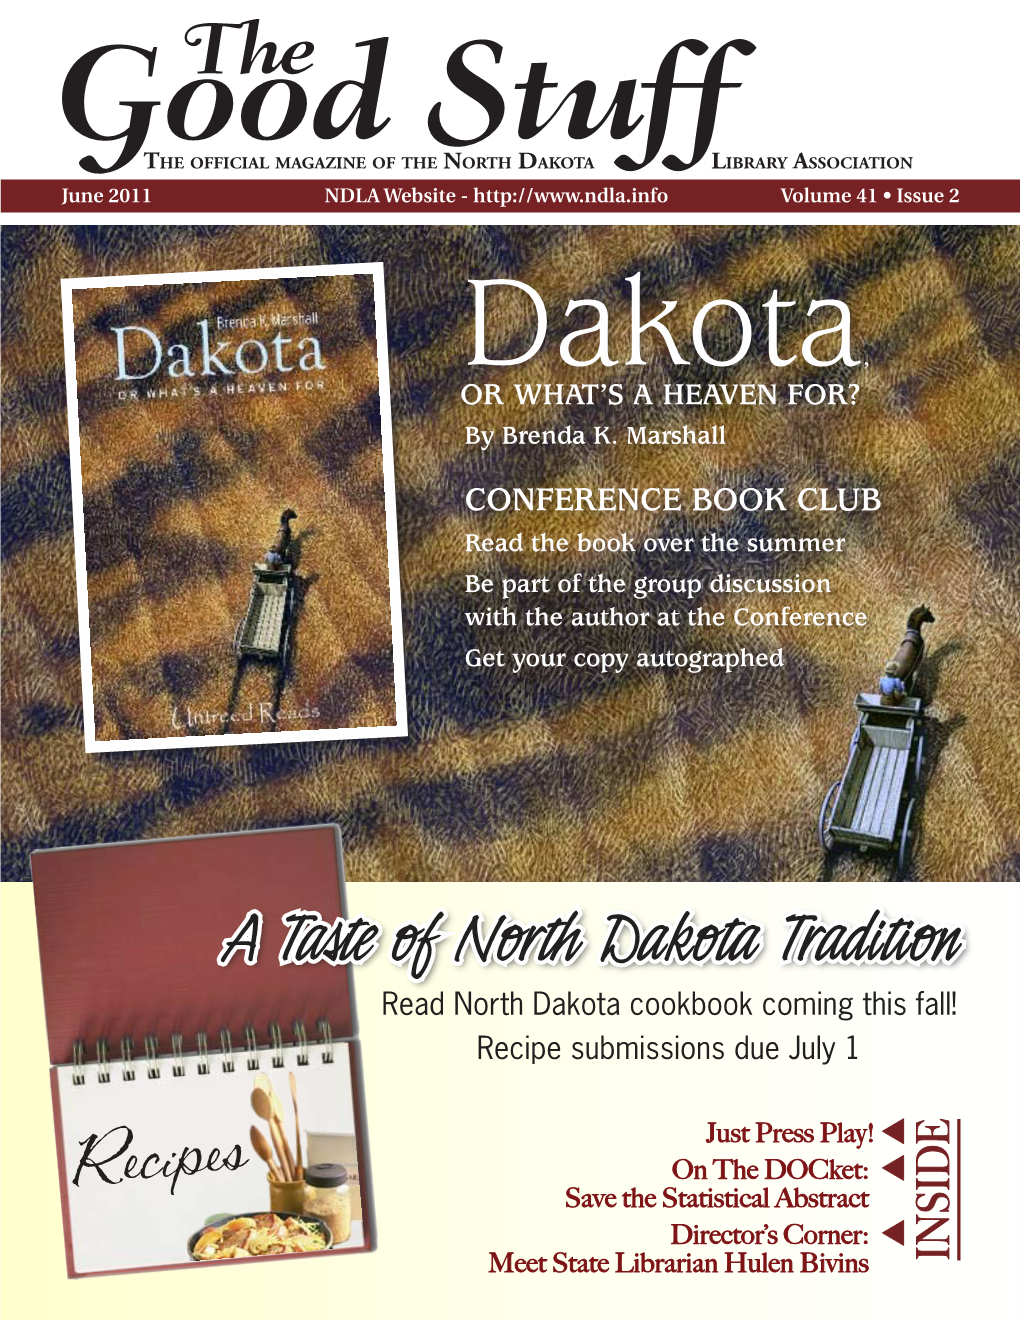 Recipesa Taste of North Dakota Tradition